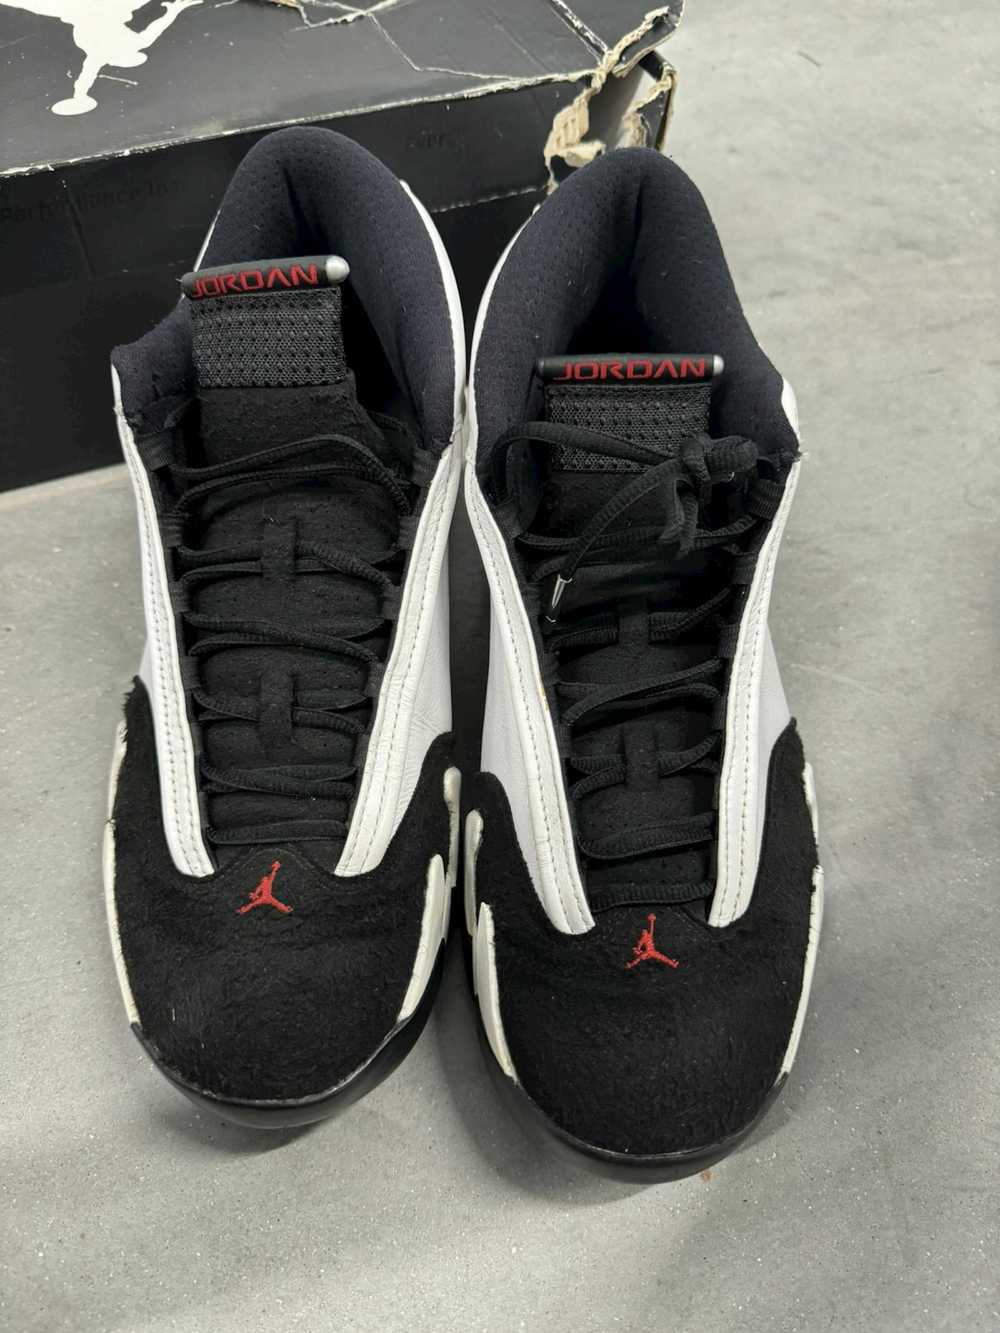 Jordan Brand Used Jordan 14 “Black Toe” 2014 - image 5